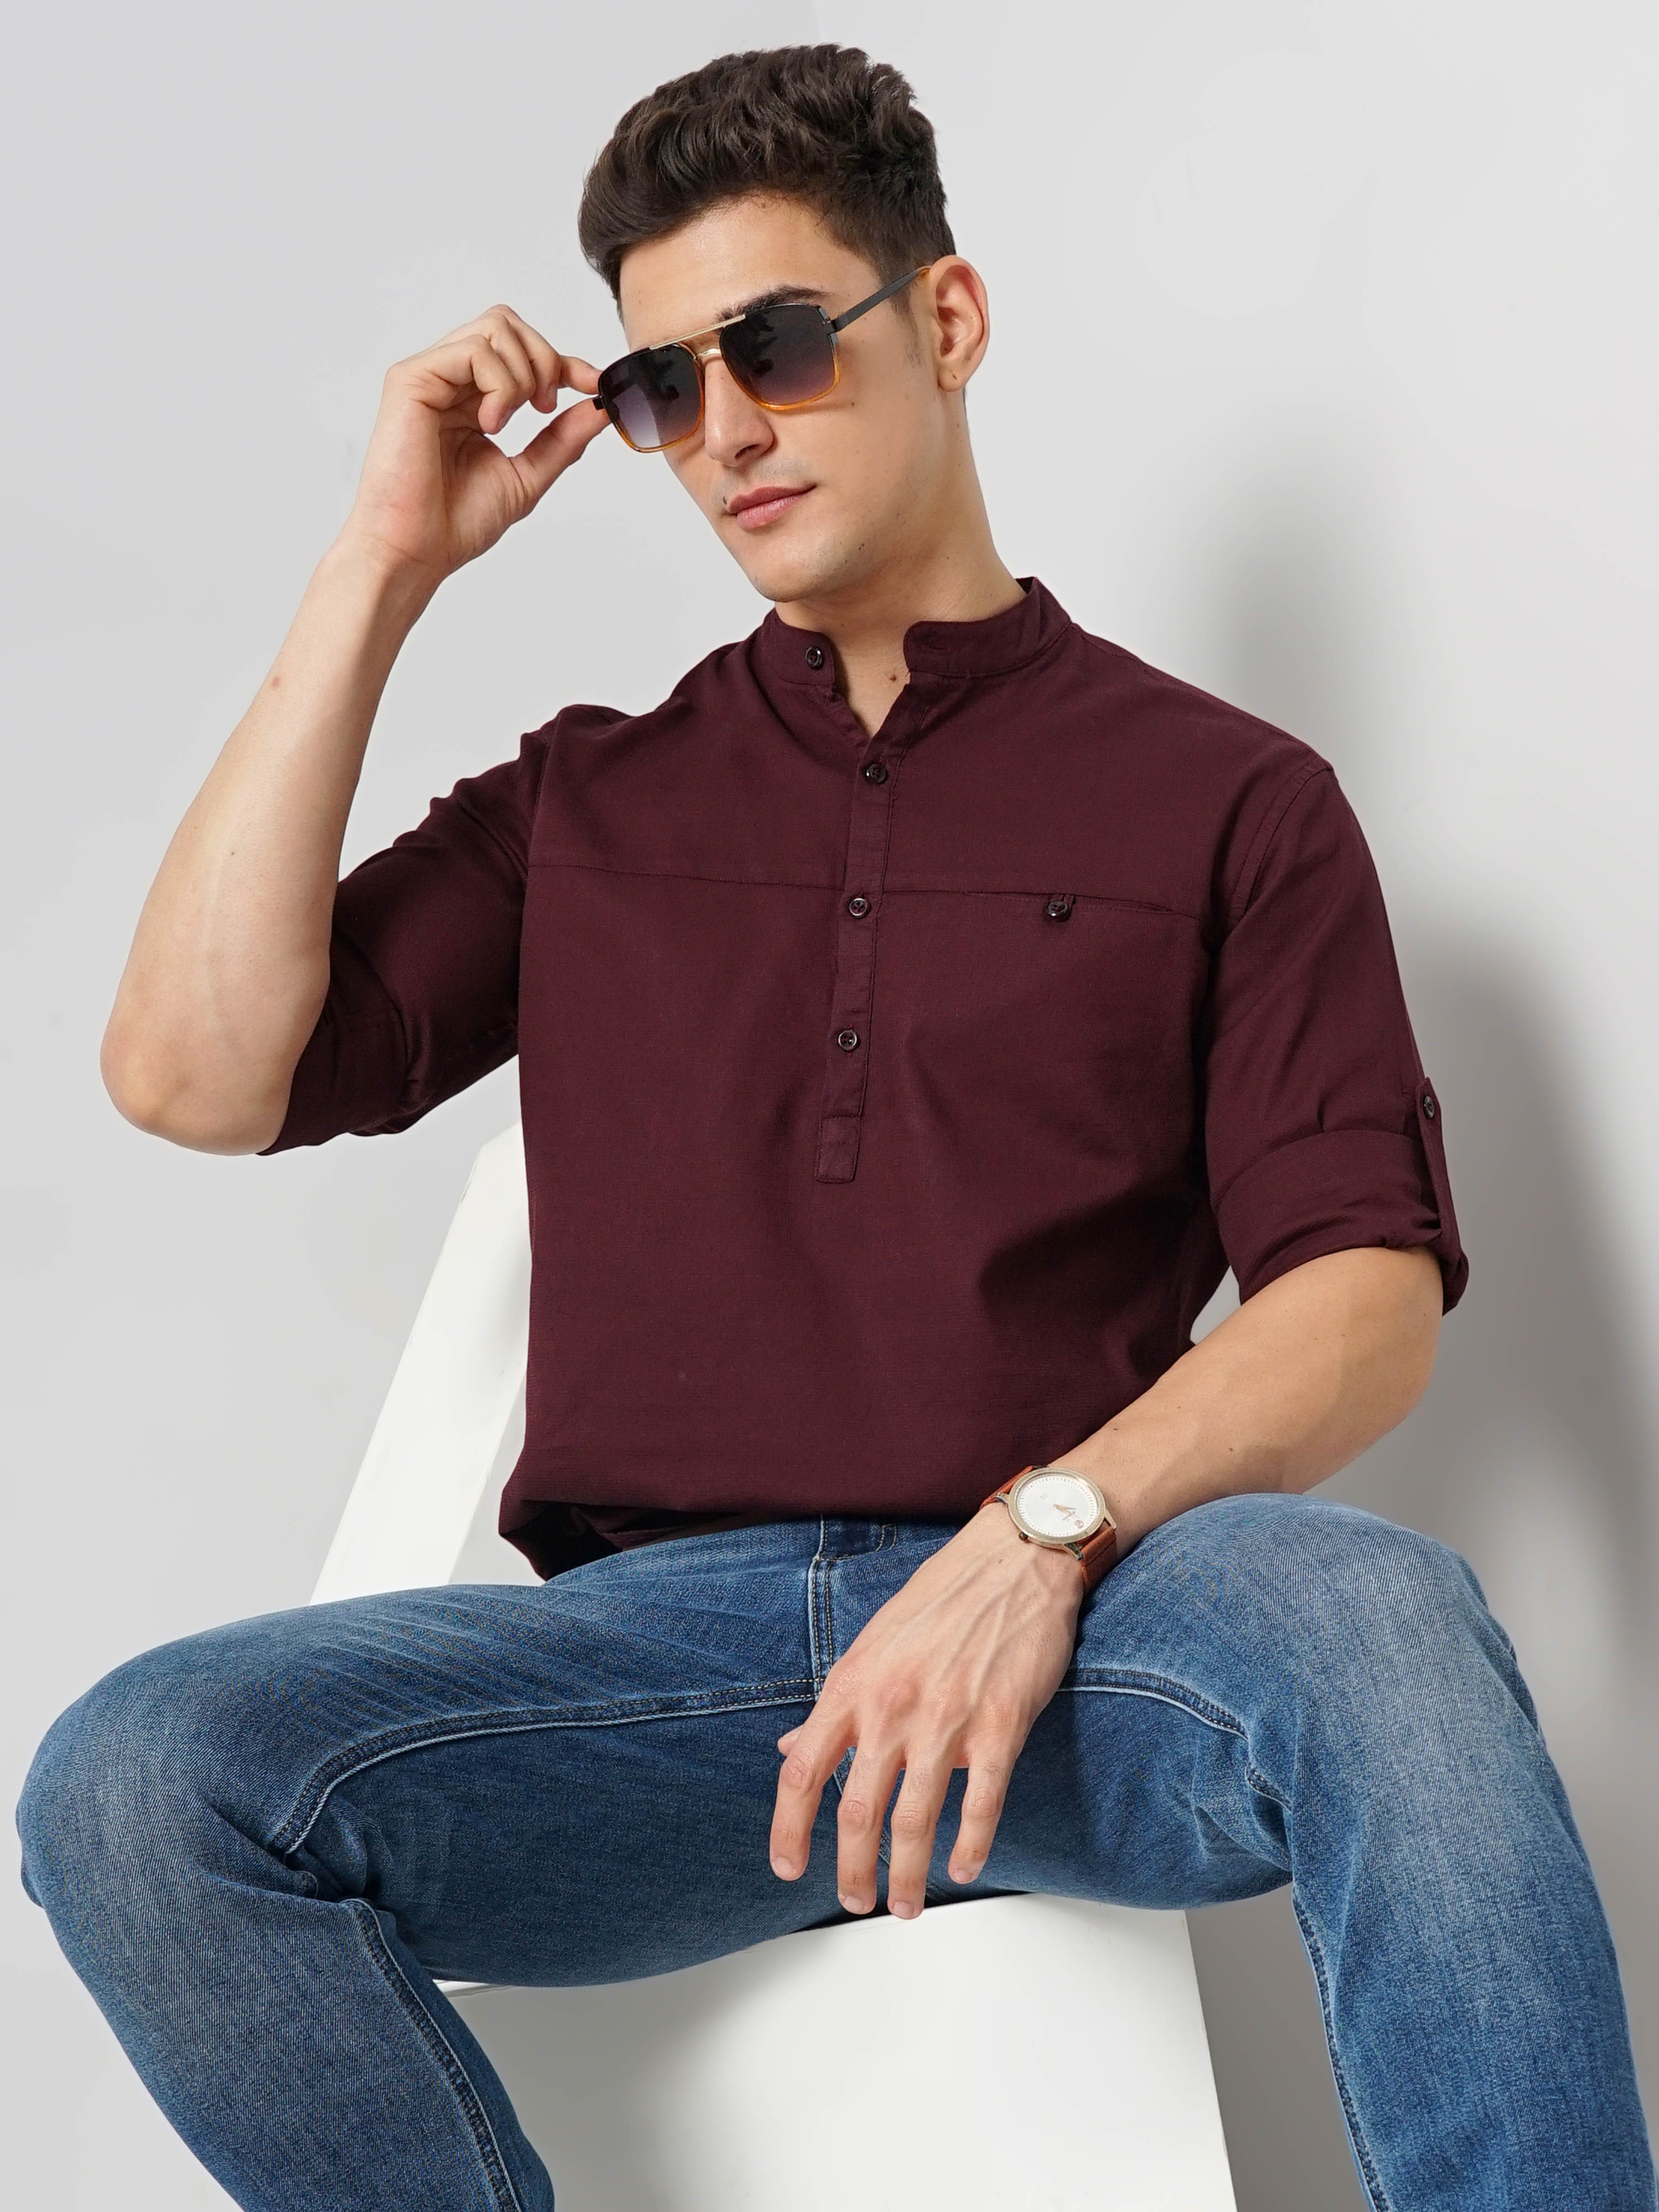 Celio Men's Solid Burgundy Full Sleeve Contemporary Shirt